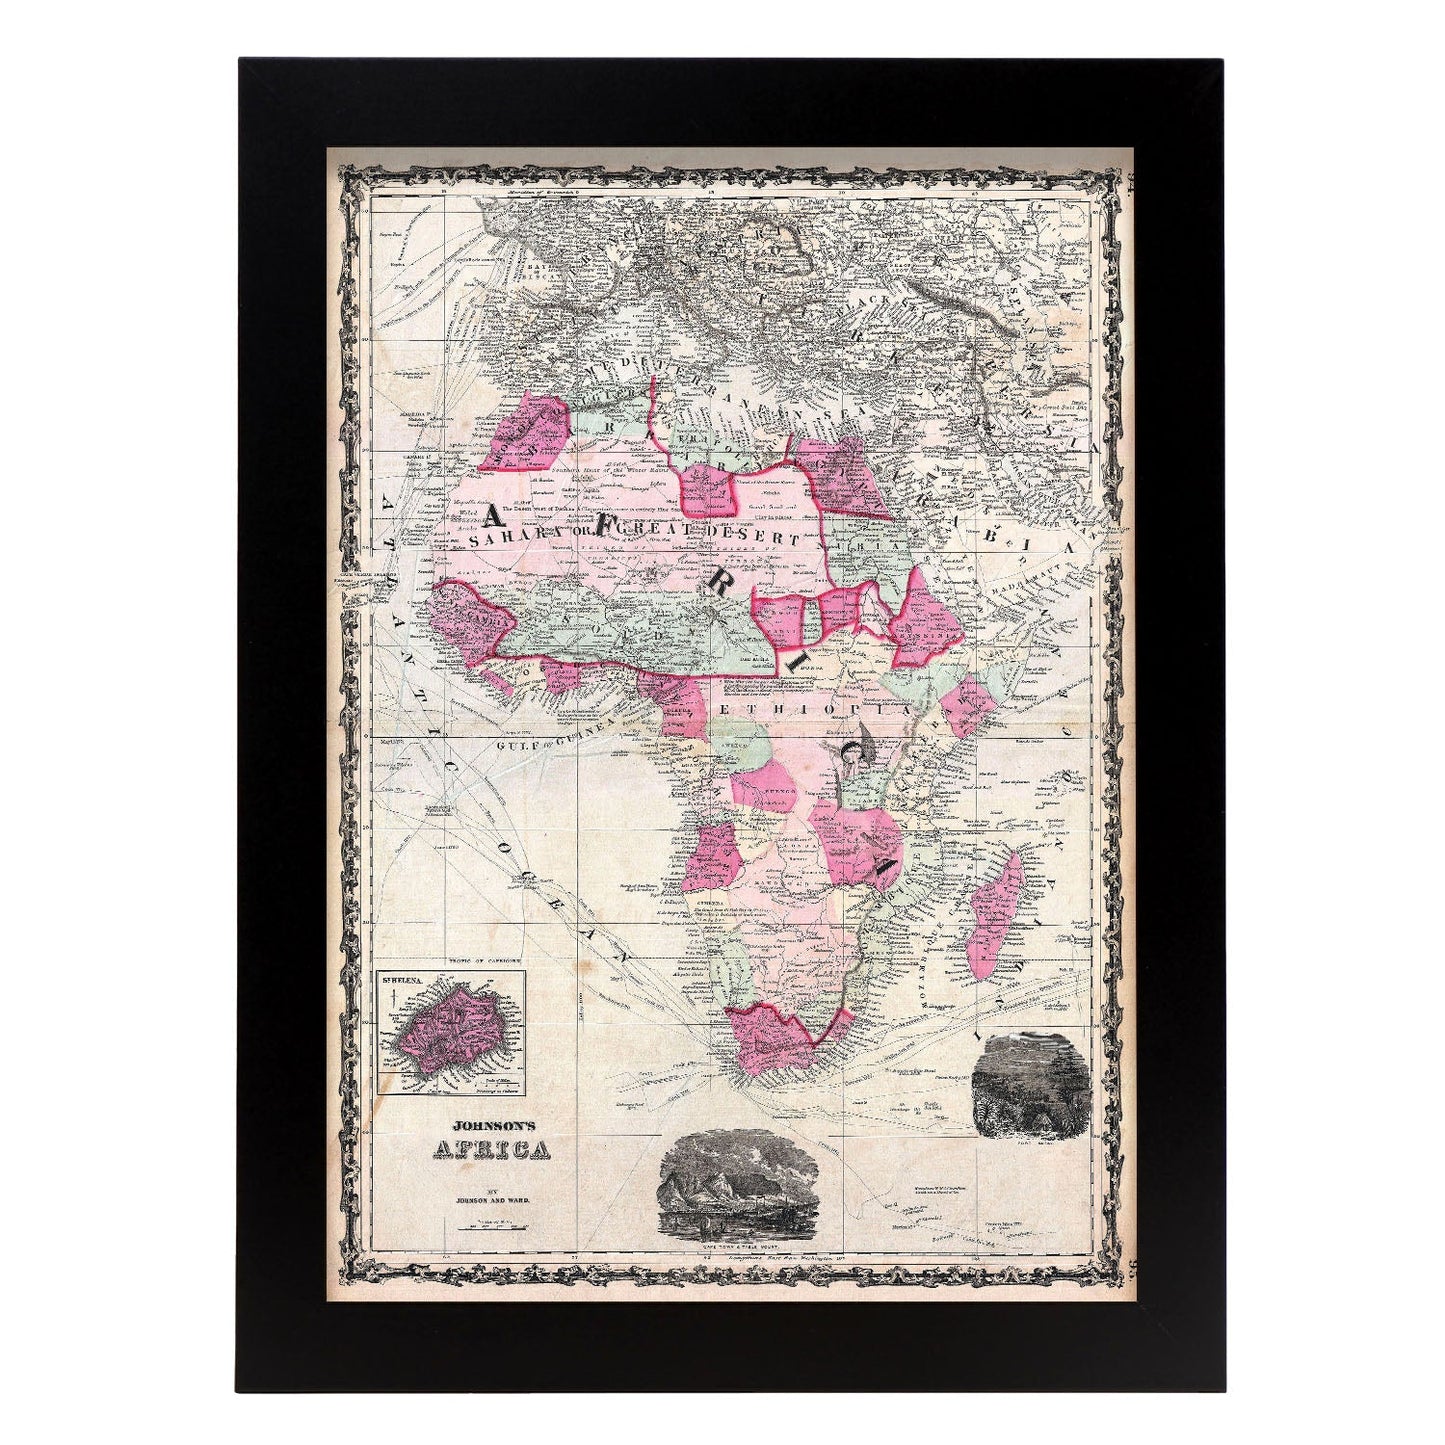 1862 Johnson Map of Africa Geographicus Afria johnson 1862-Artwork-Nacnic-A4-Sin marco-Nacnic Estudio SL